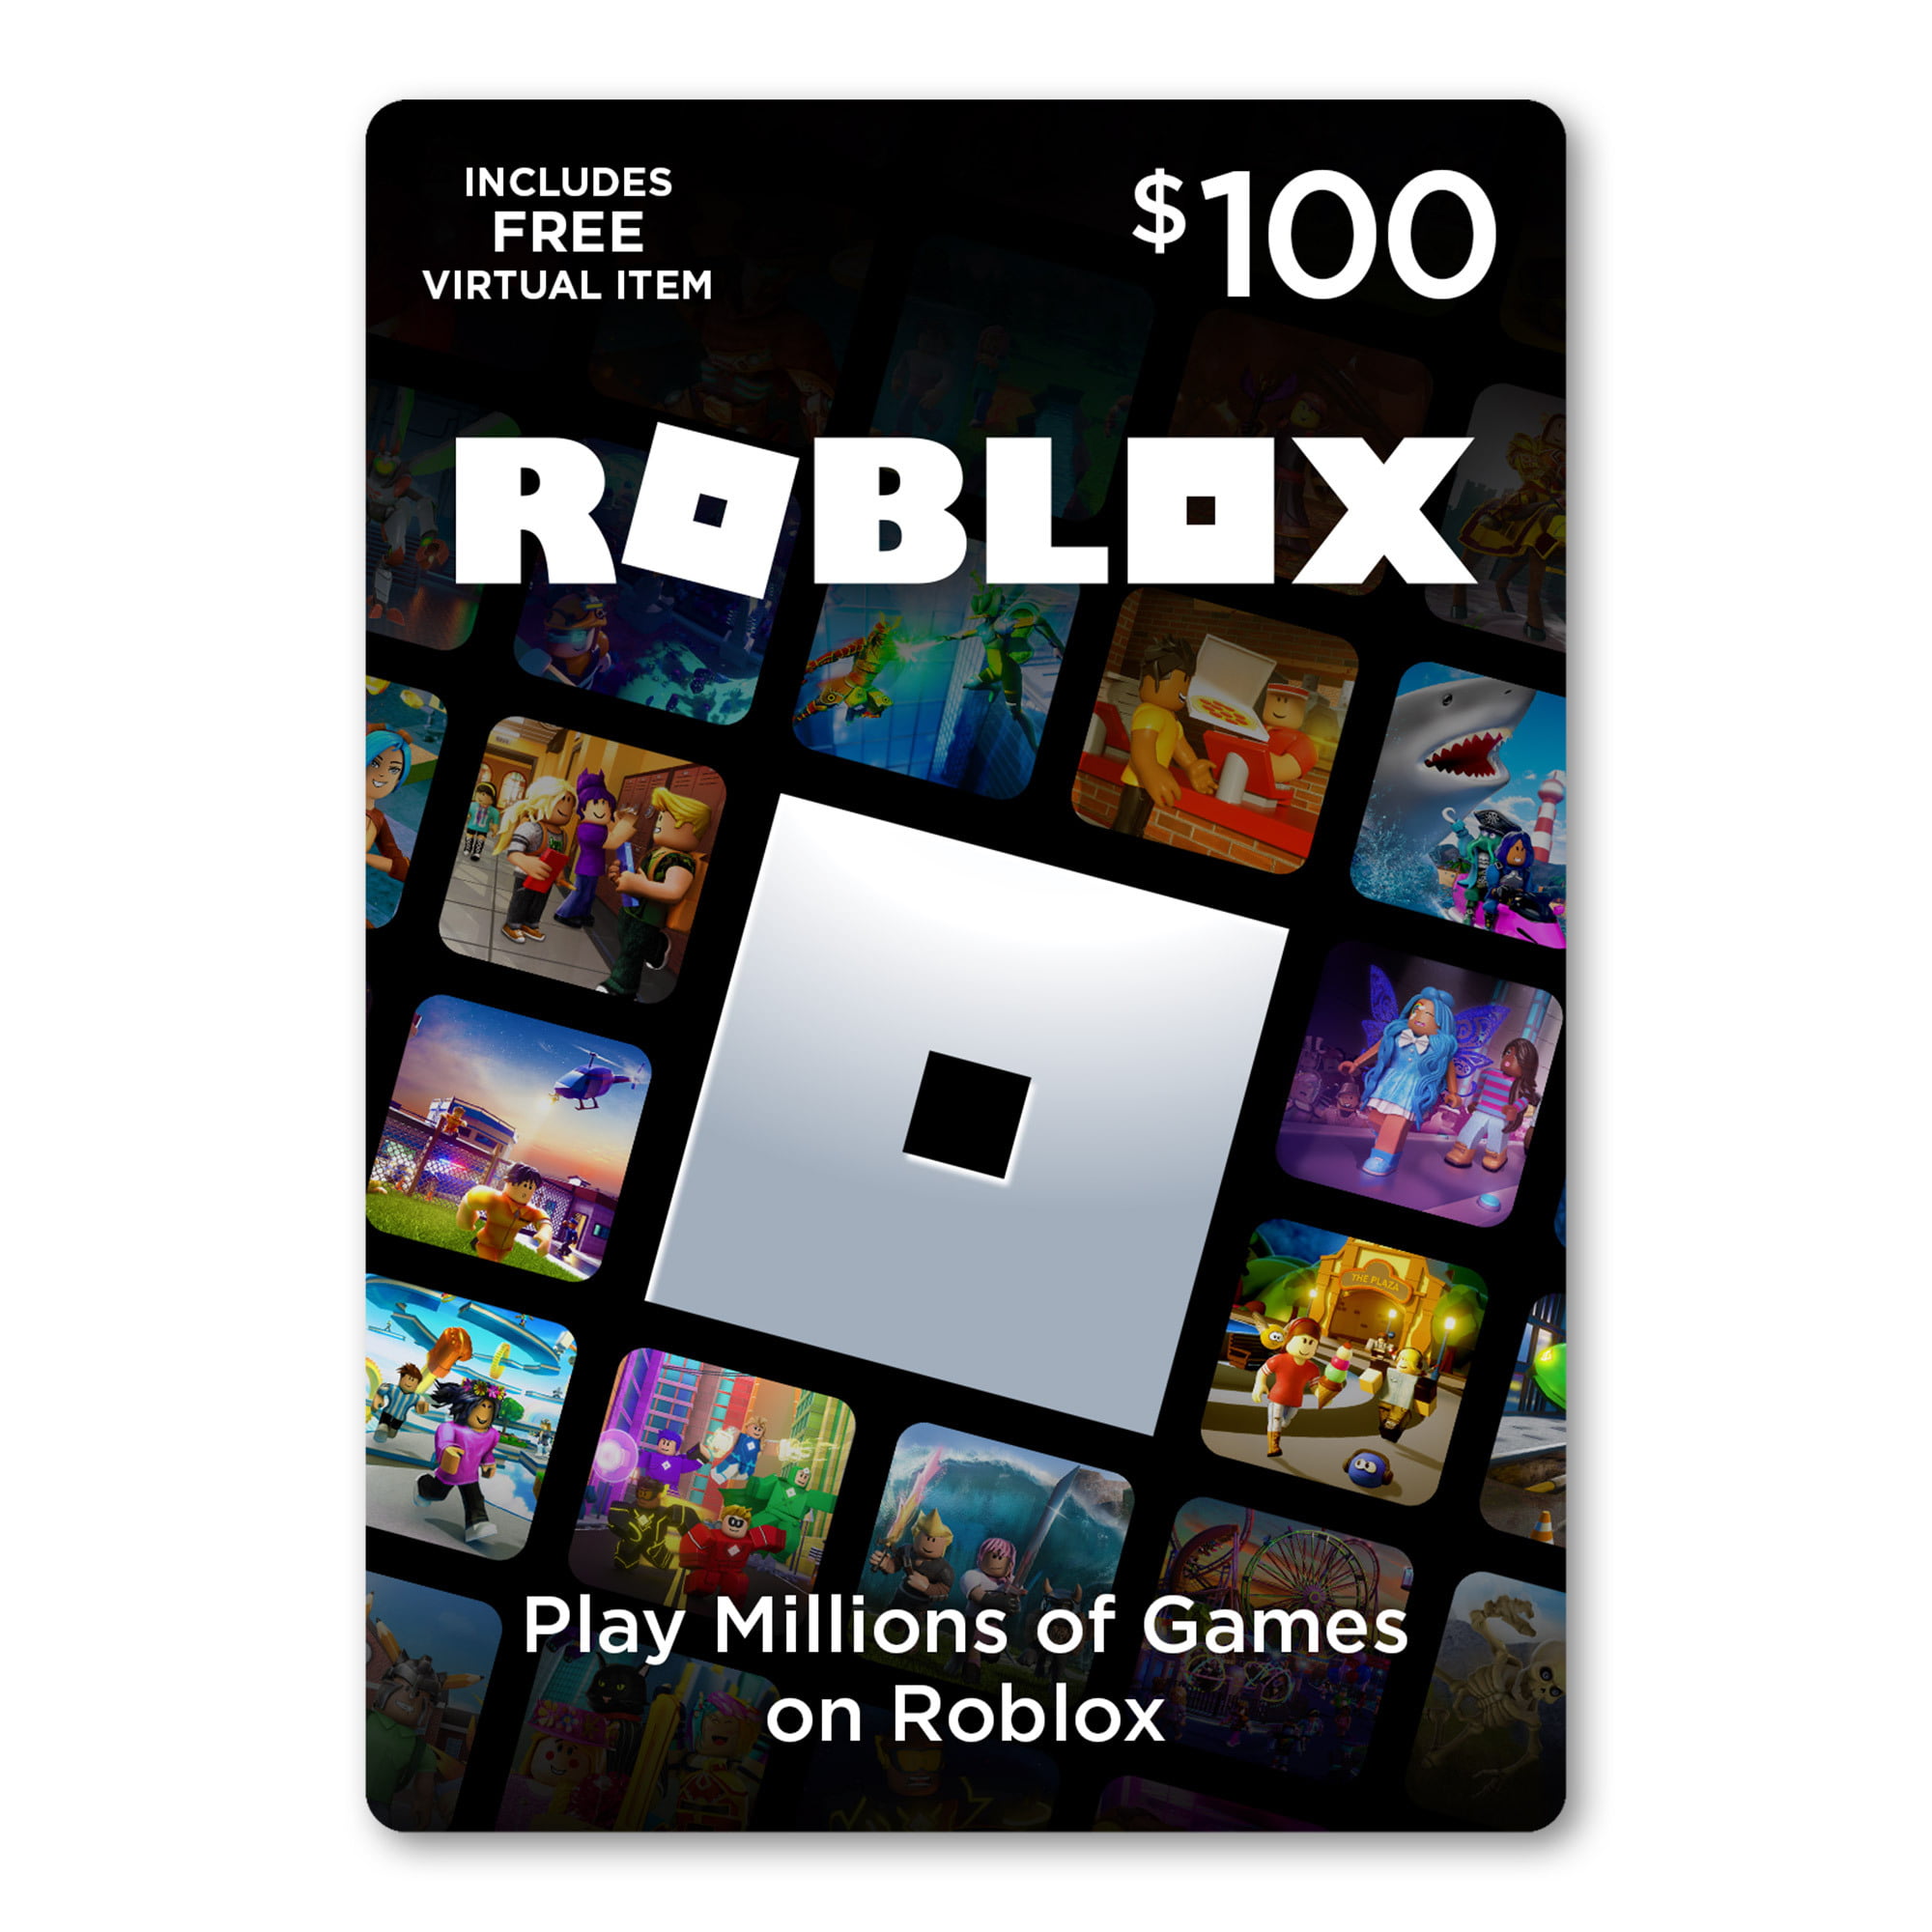 Roblox 100 Digital Gift Card Includes Exclusive Virtual Item Digital Download Walmart Com Walmart Com - roblox gift card codes never used